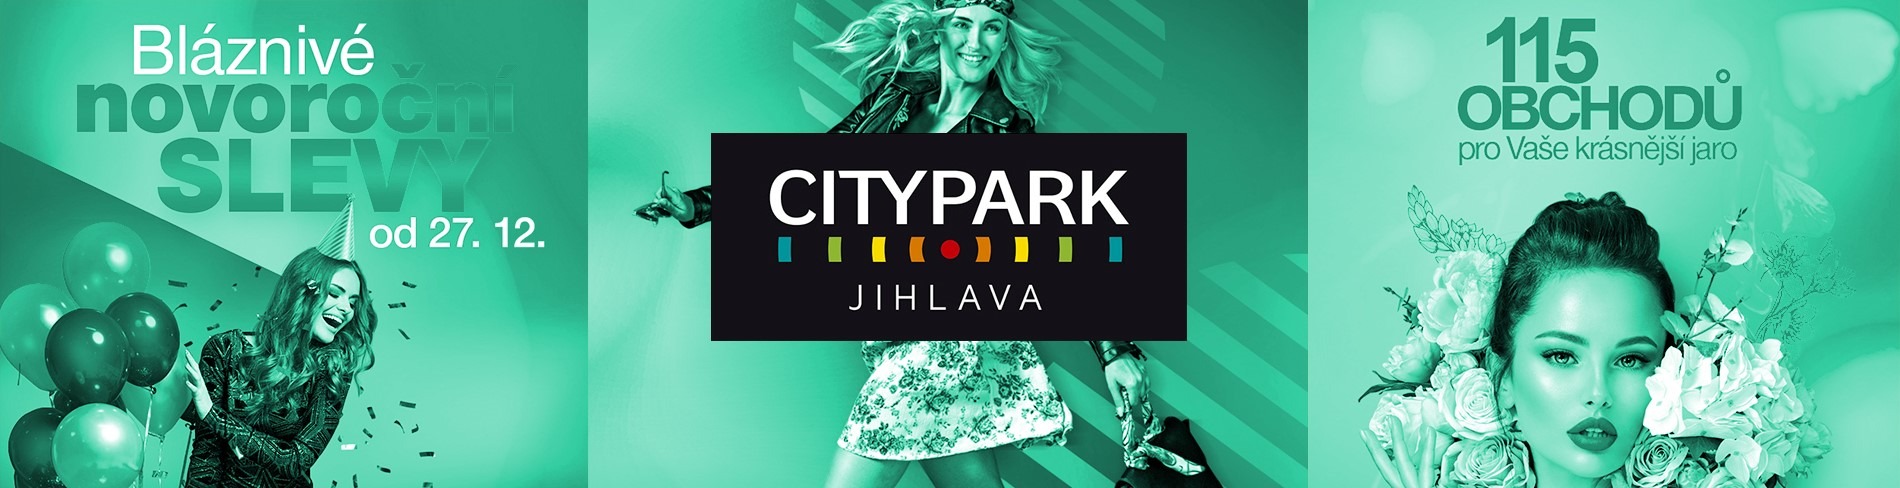 Citypark Jihlava